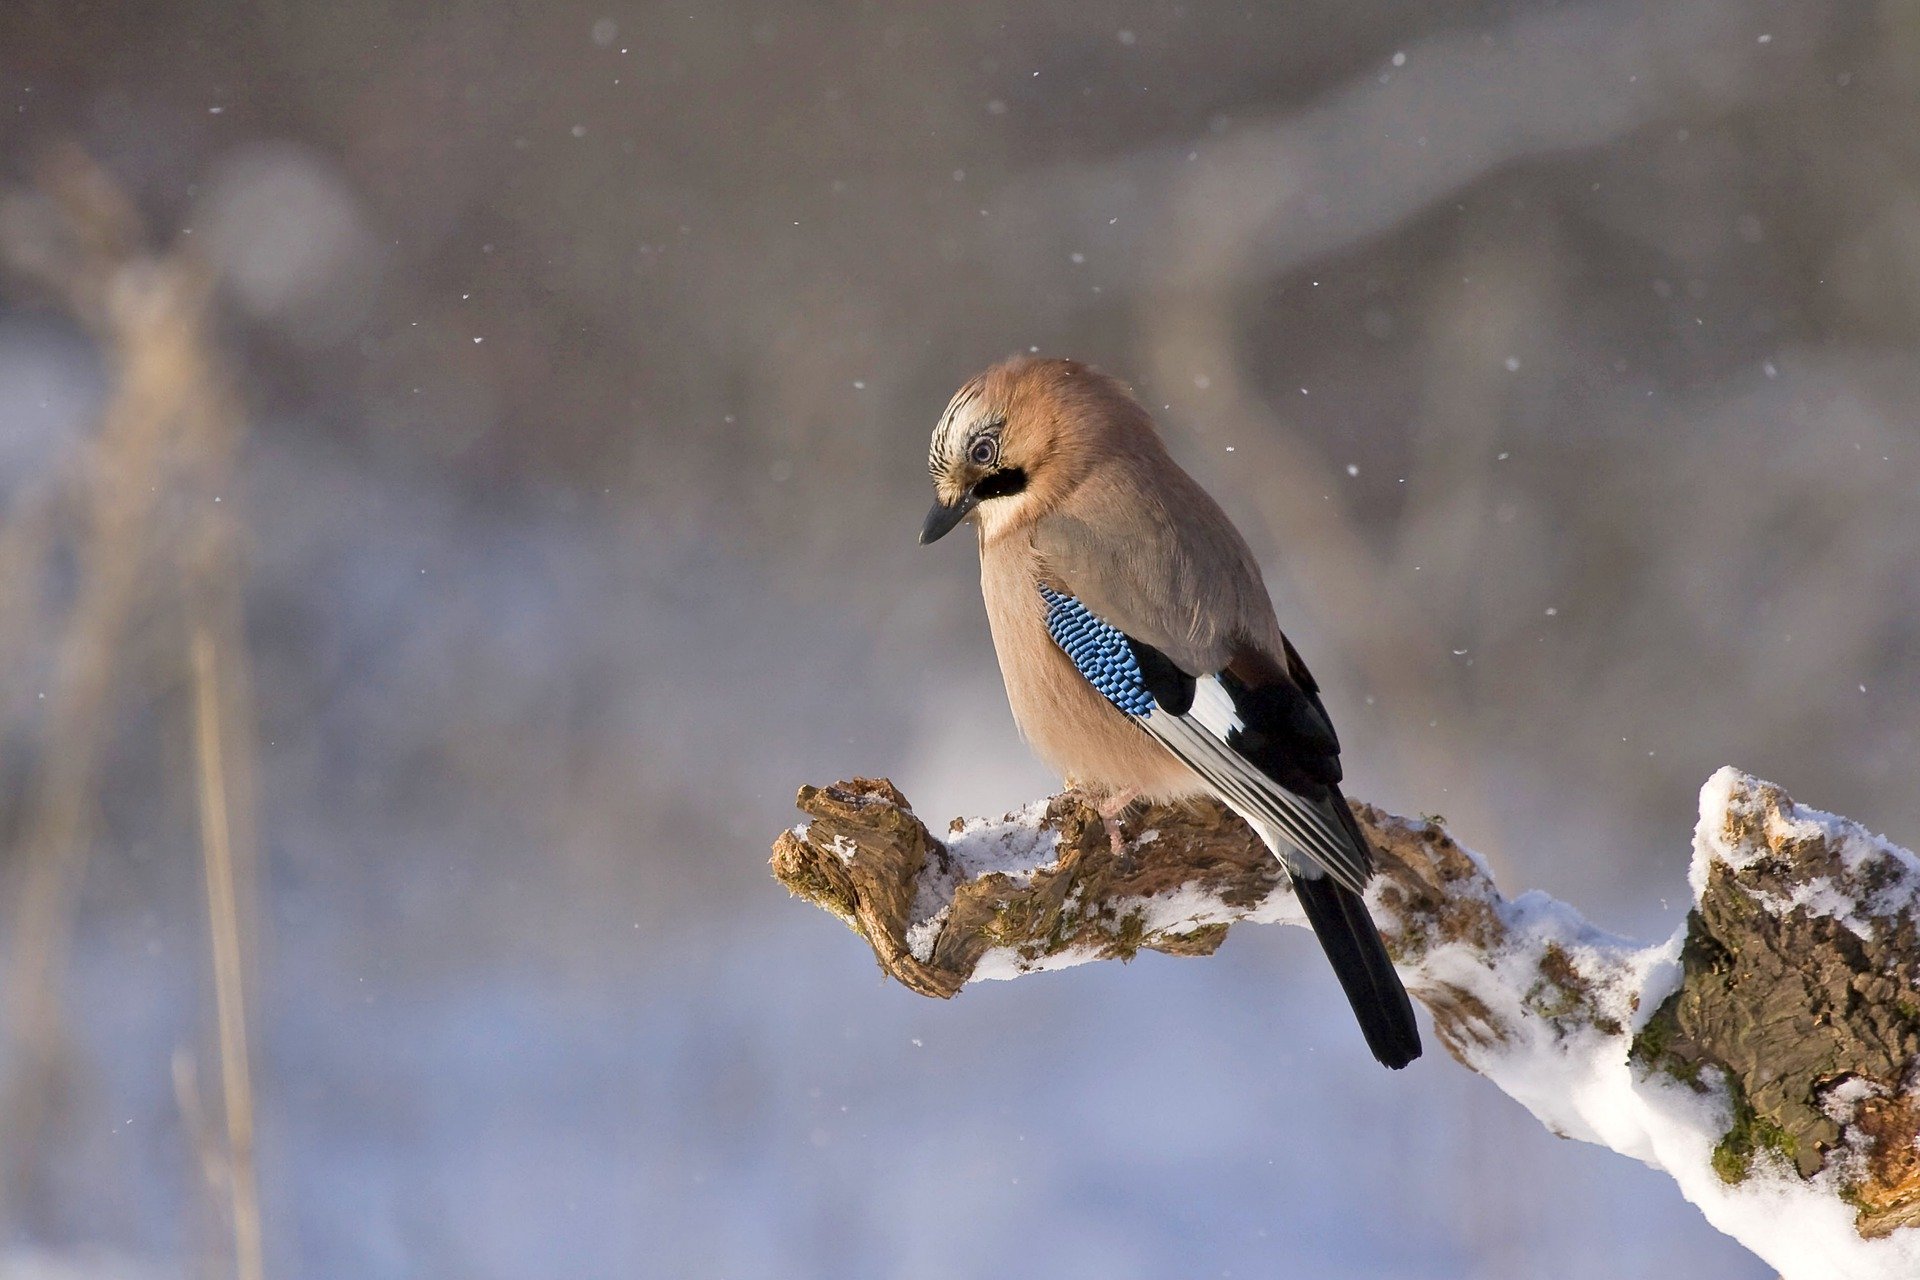 A bird on a snowy branch